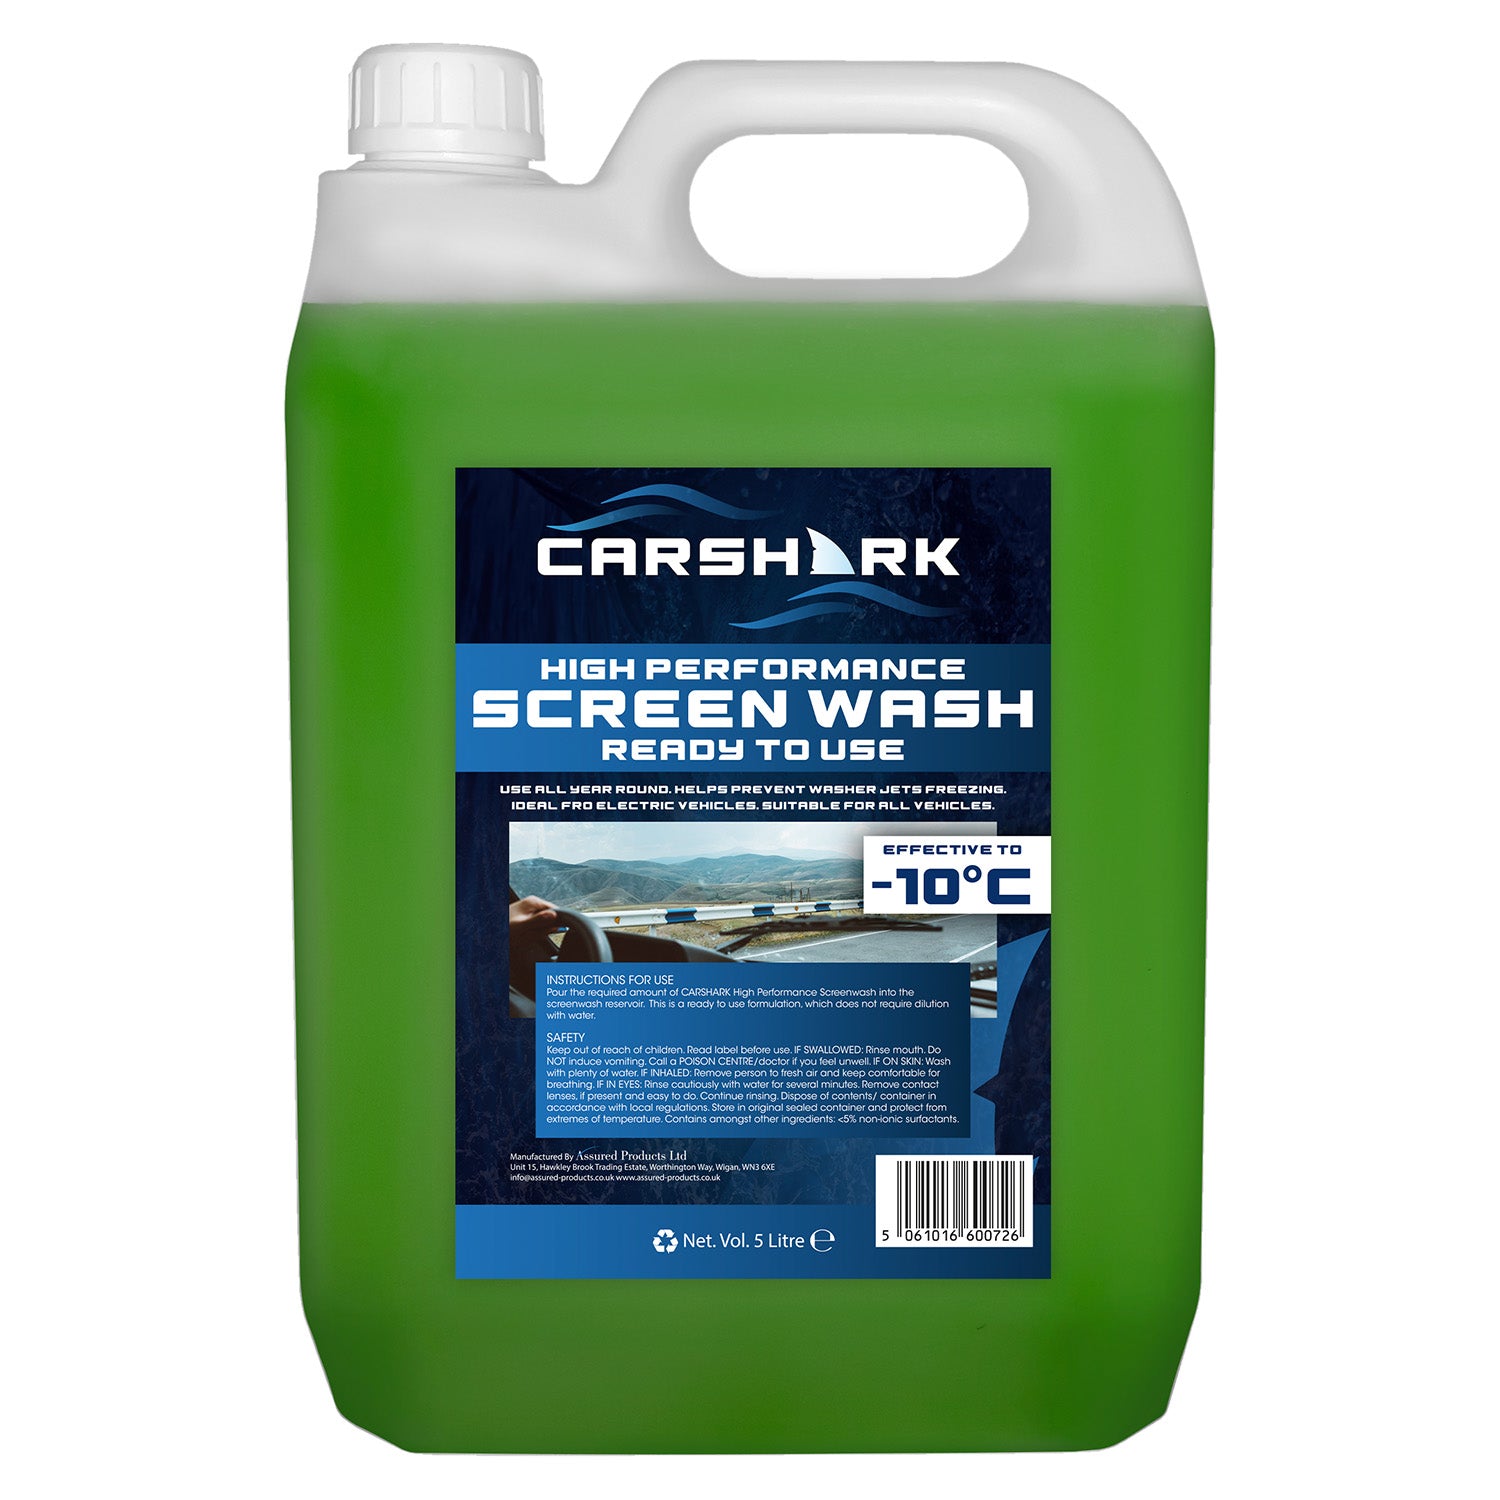 CARSHARK Rain Repellent Screenwash Additive 500ml with Winter Screenwash 5L (Green)